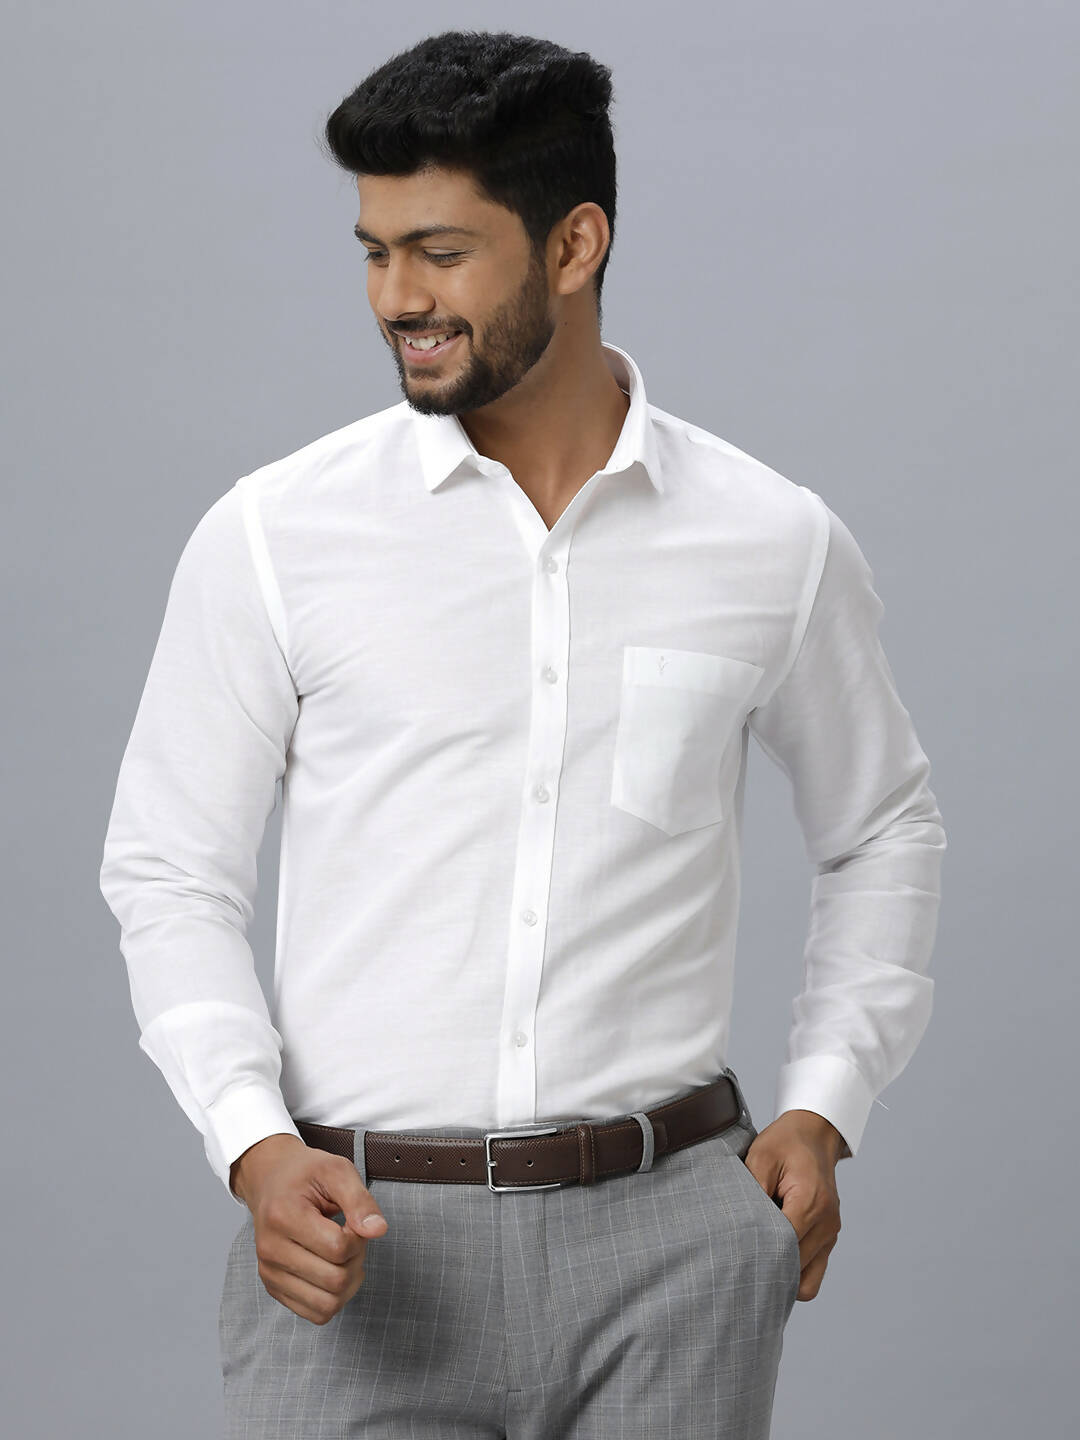 Ramraj Cotton - NEW ARRIVALS FOR MEN!! Shop from the range... | Facebook